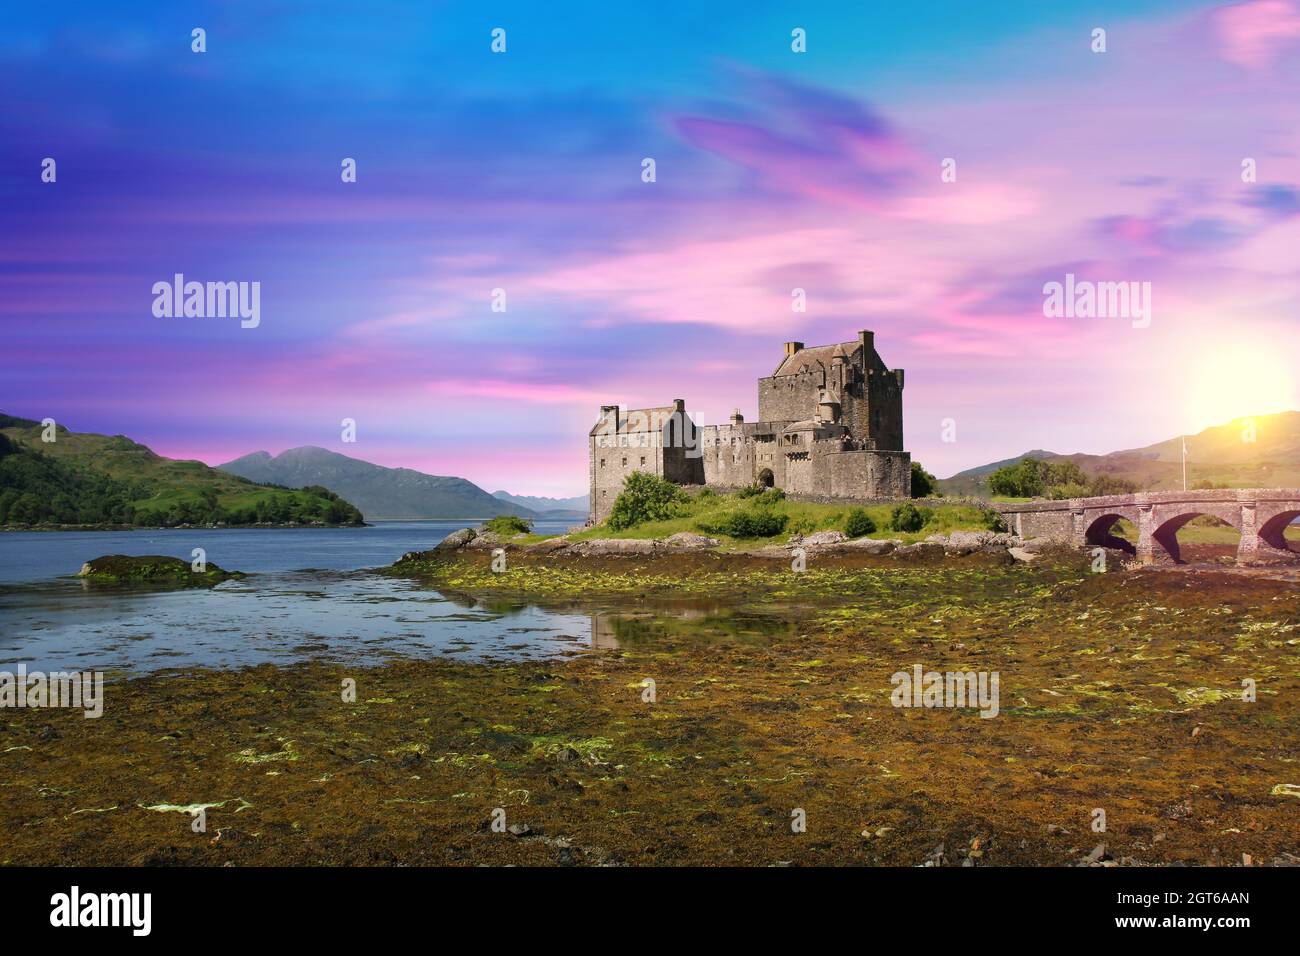 Castillo de Eilean Donan, Isla de Eilean Donan en Escocia, Reino Unido Foto de stock